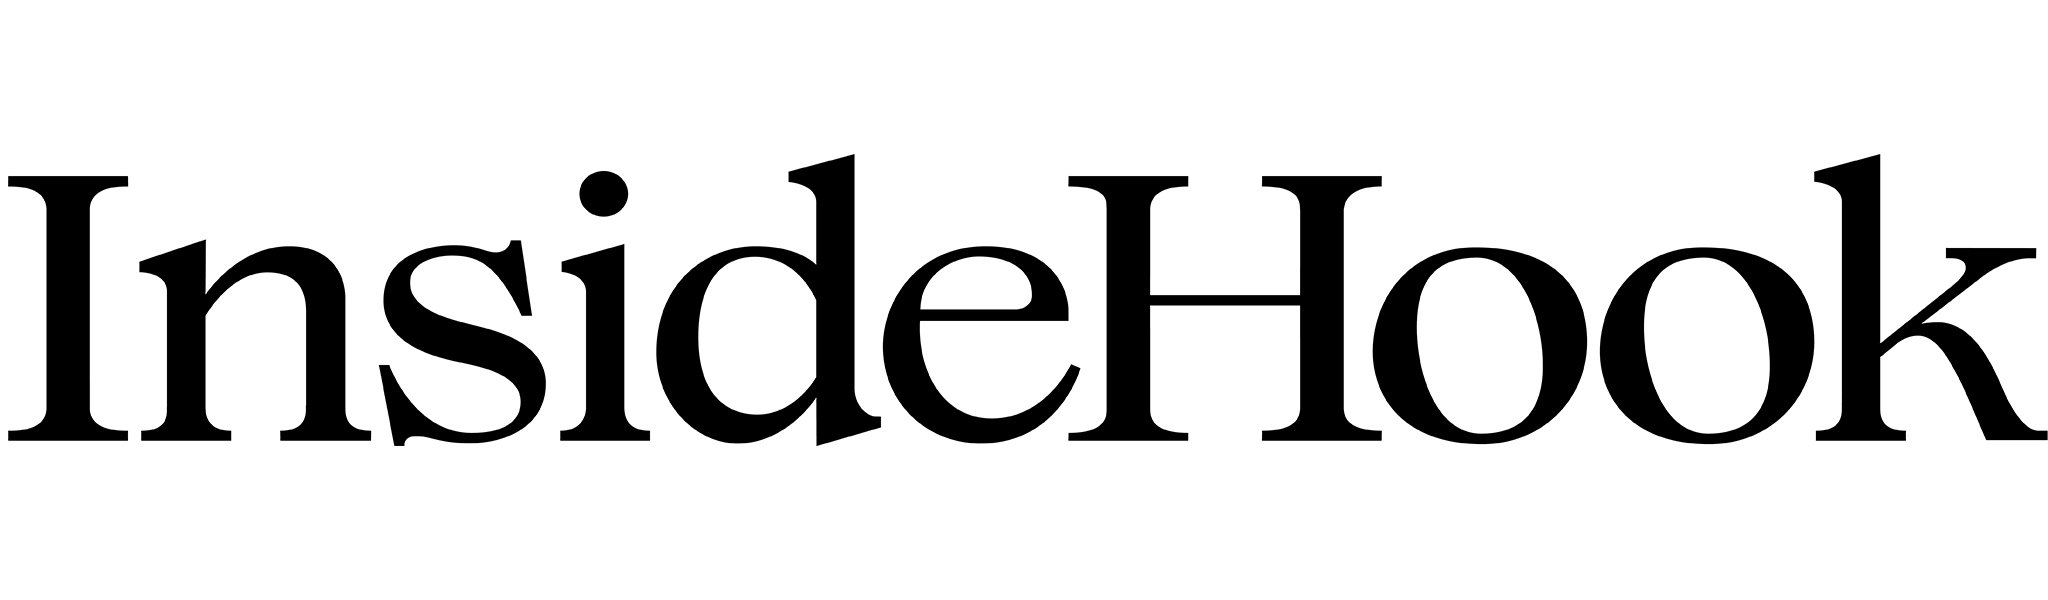 InsideHook logo